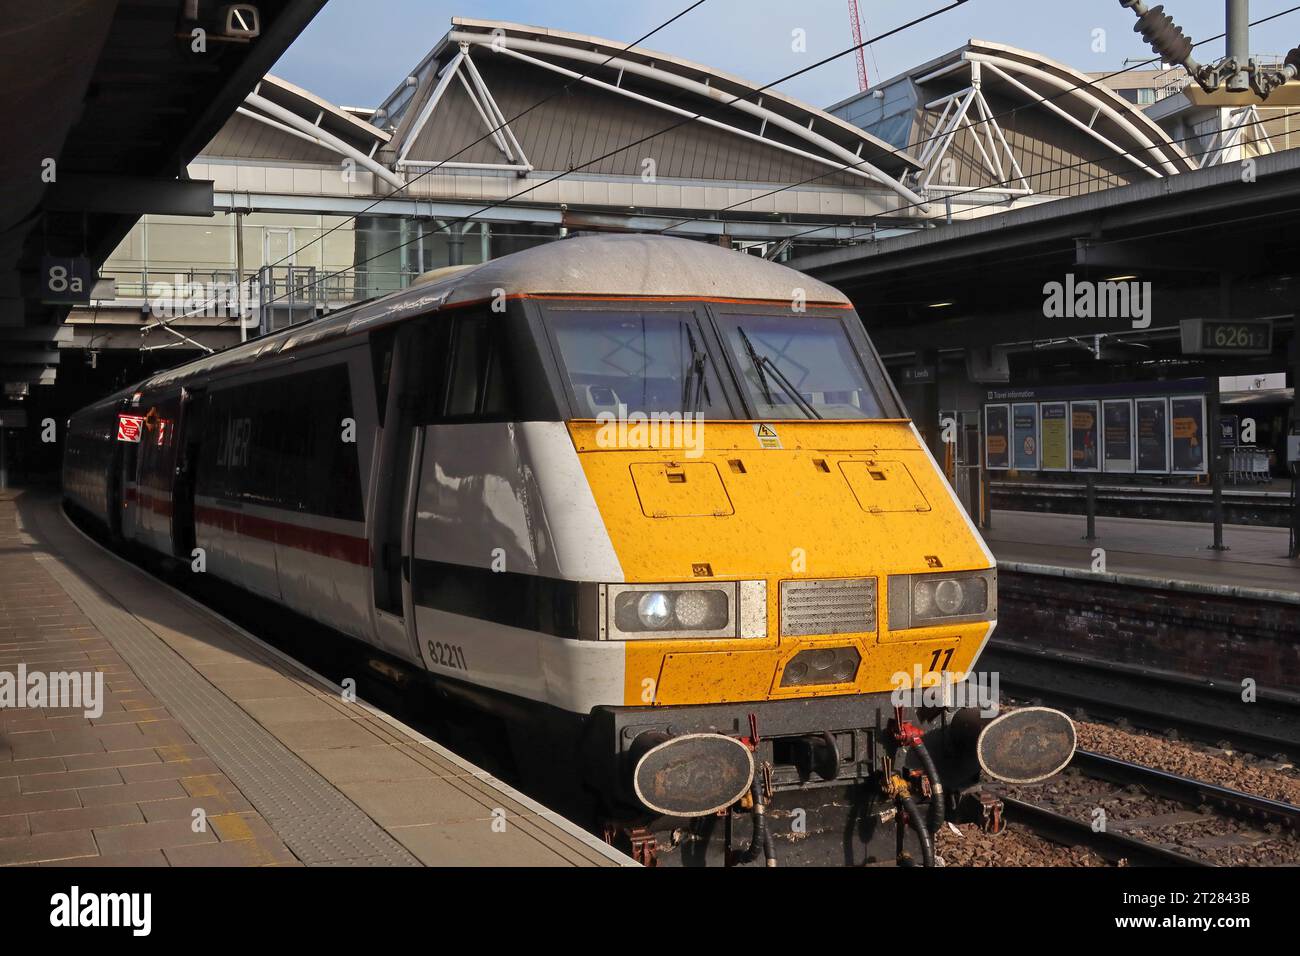 LNER 82211 Presentation train loco at New Station St, Leeds, Yorkshire, England, LS1 4DY Stock Photo